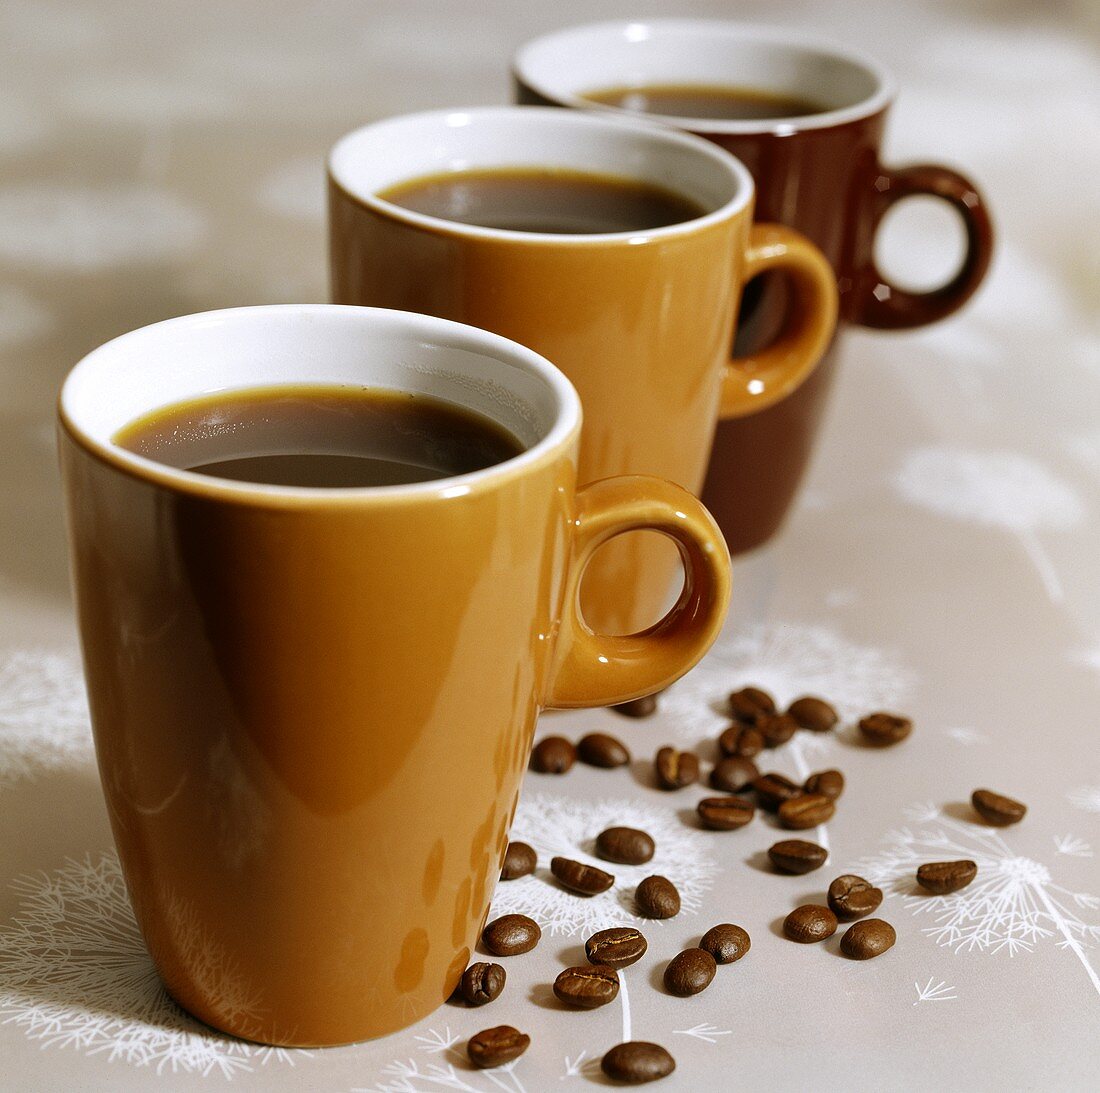 Black coffee in brown cups